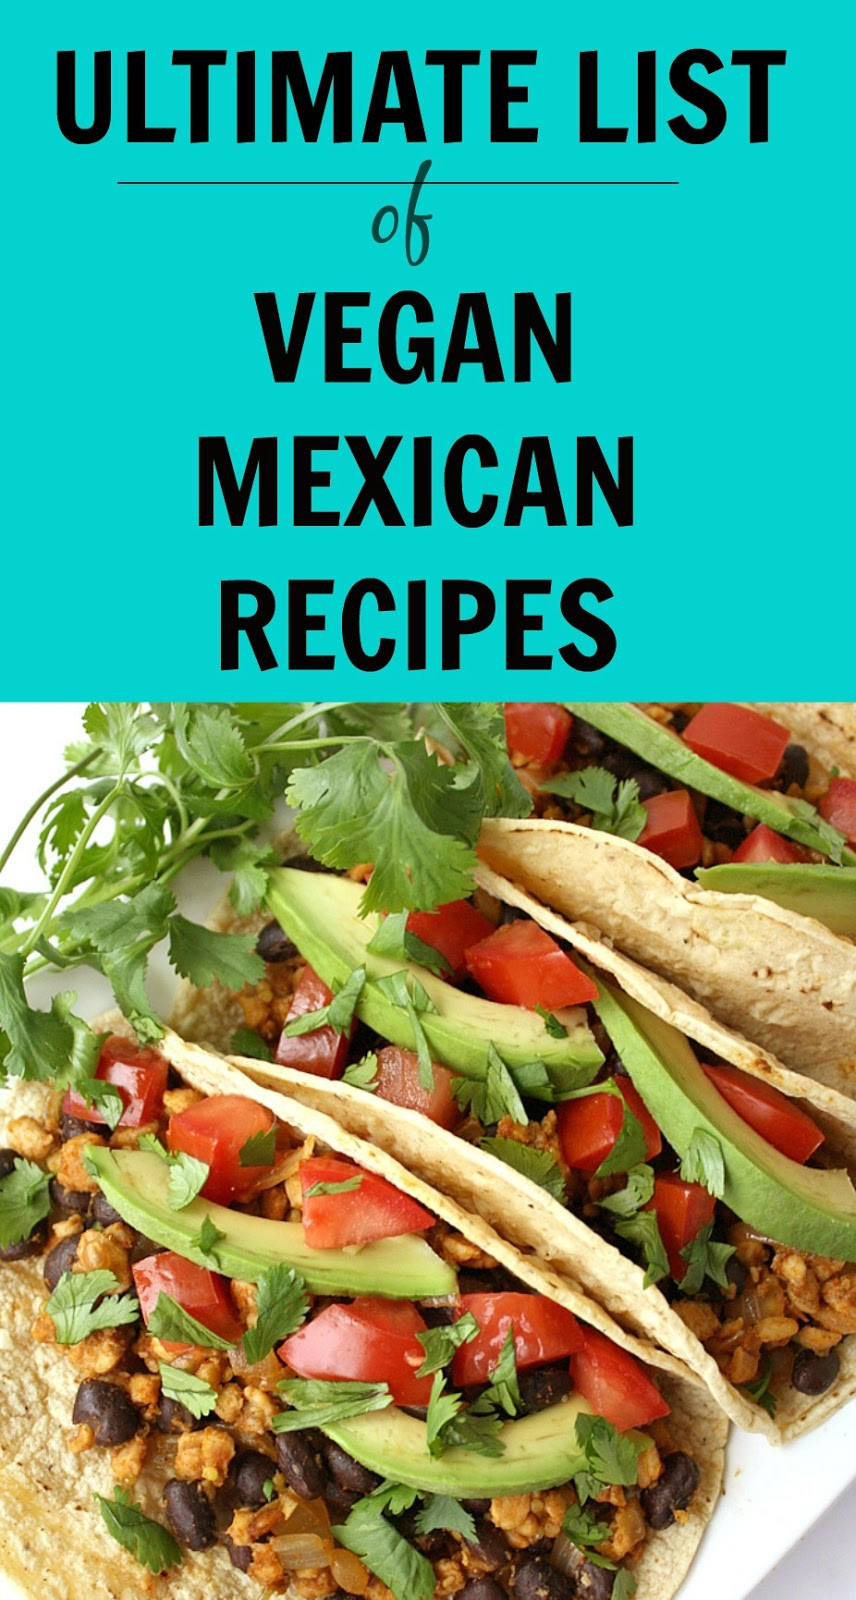 Vegetarian Mexican Recipes
 The Garden Grazer Ultimate List of Vegan Mexican Recipes